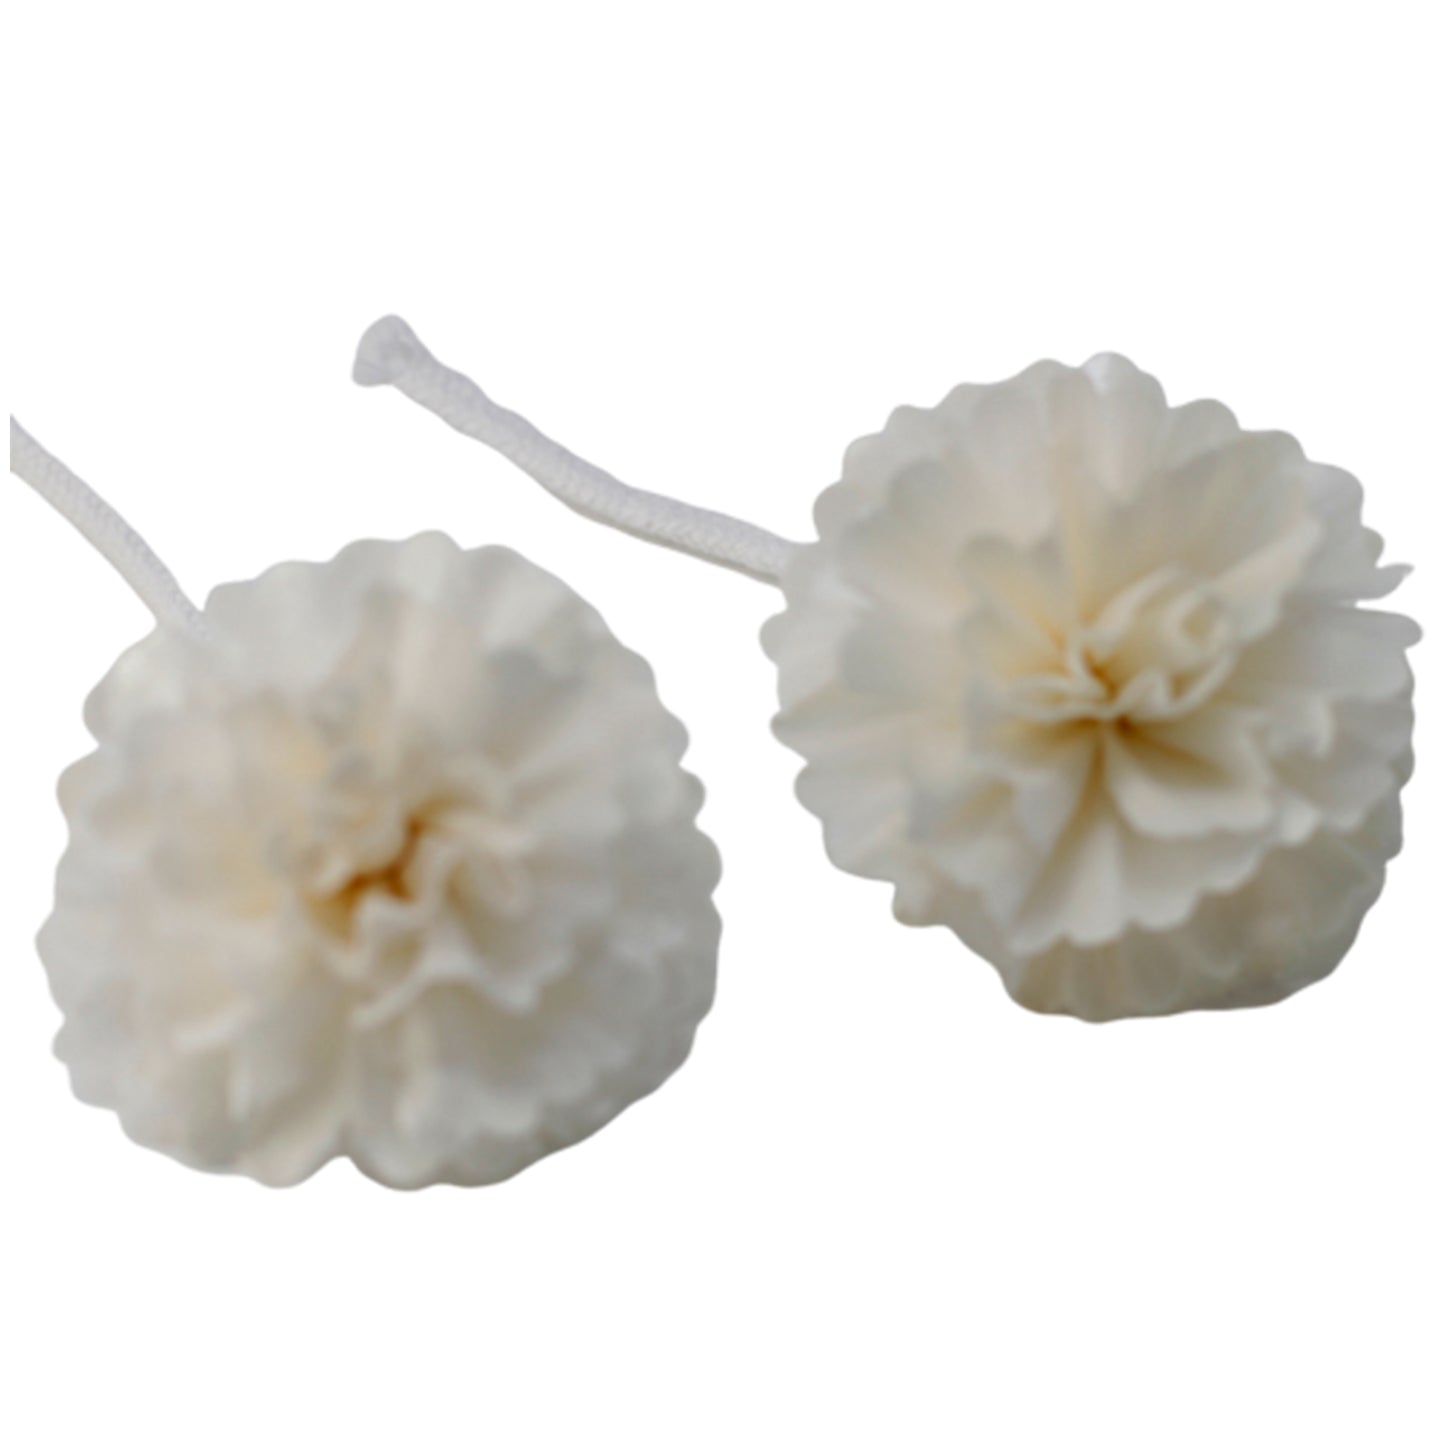 Natural Diffuser Flowers - Med Carnation on String